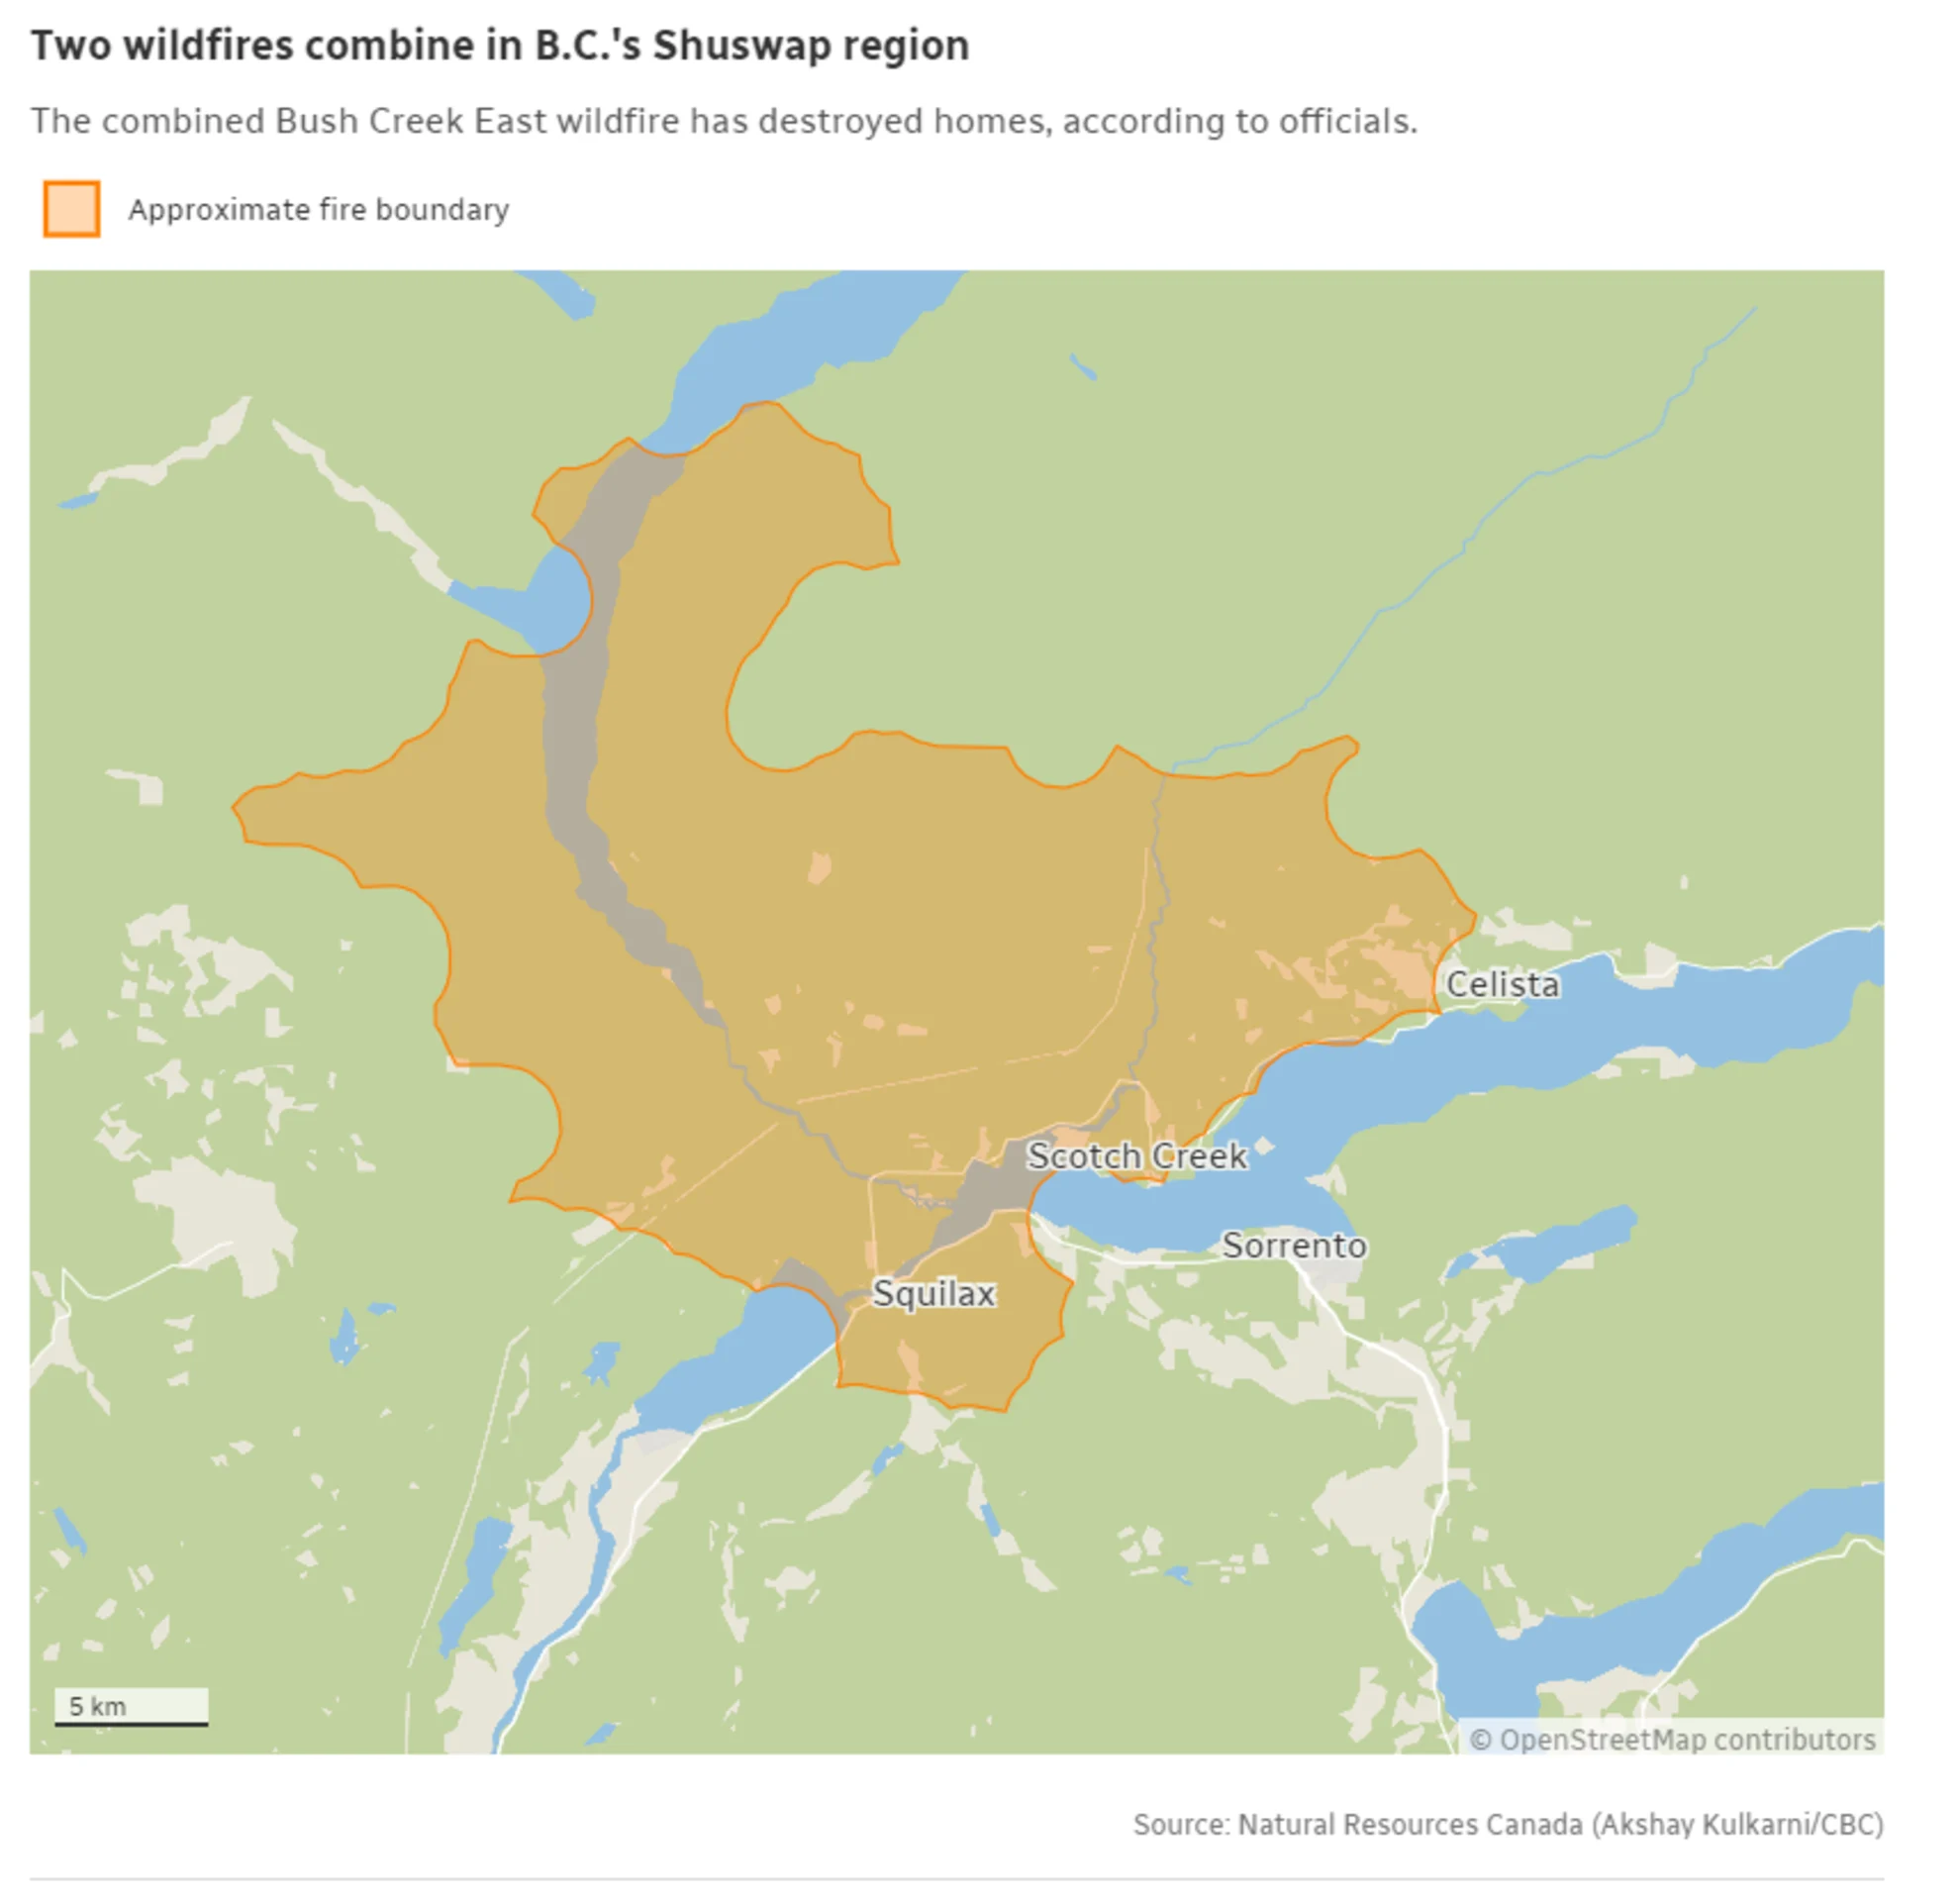 CBC - two wildfires combine in BCs shuswap region